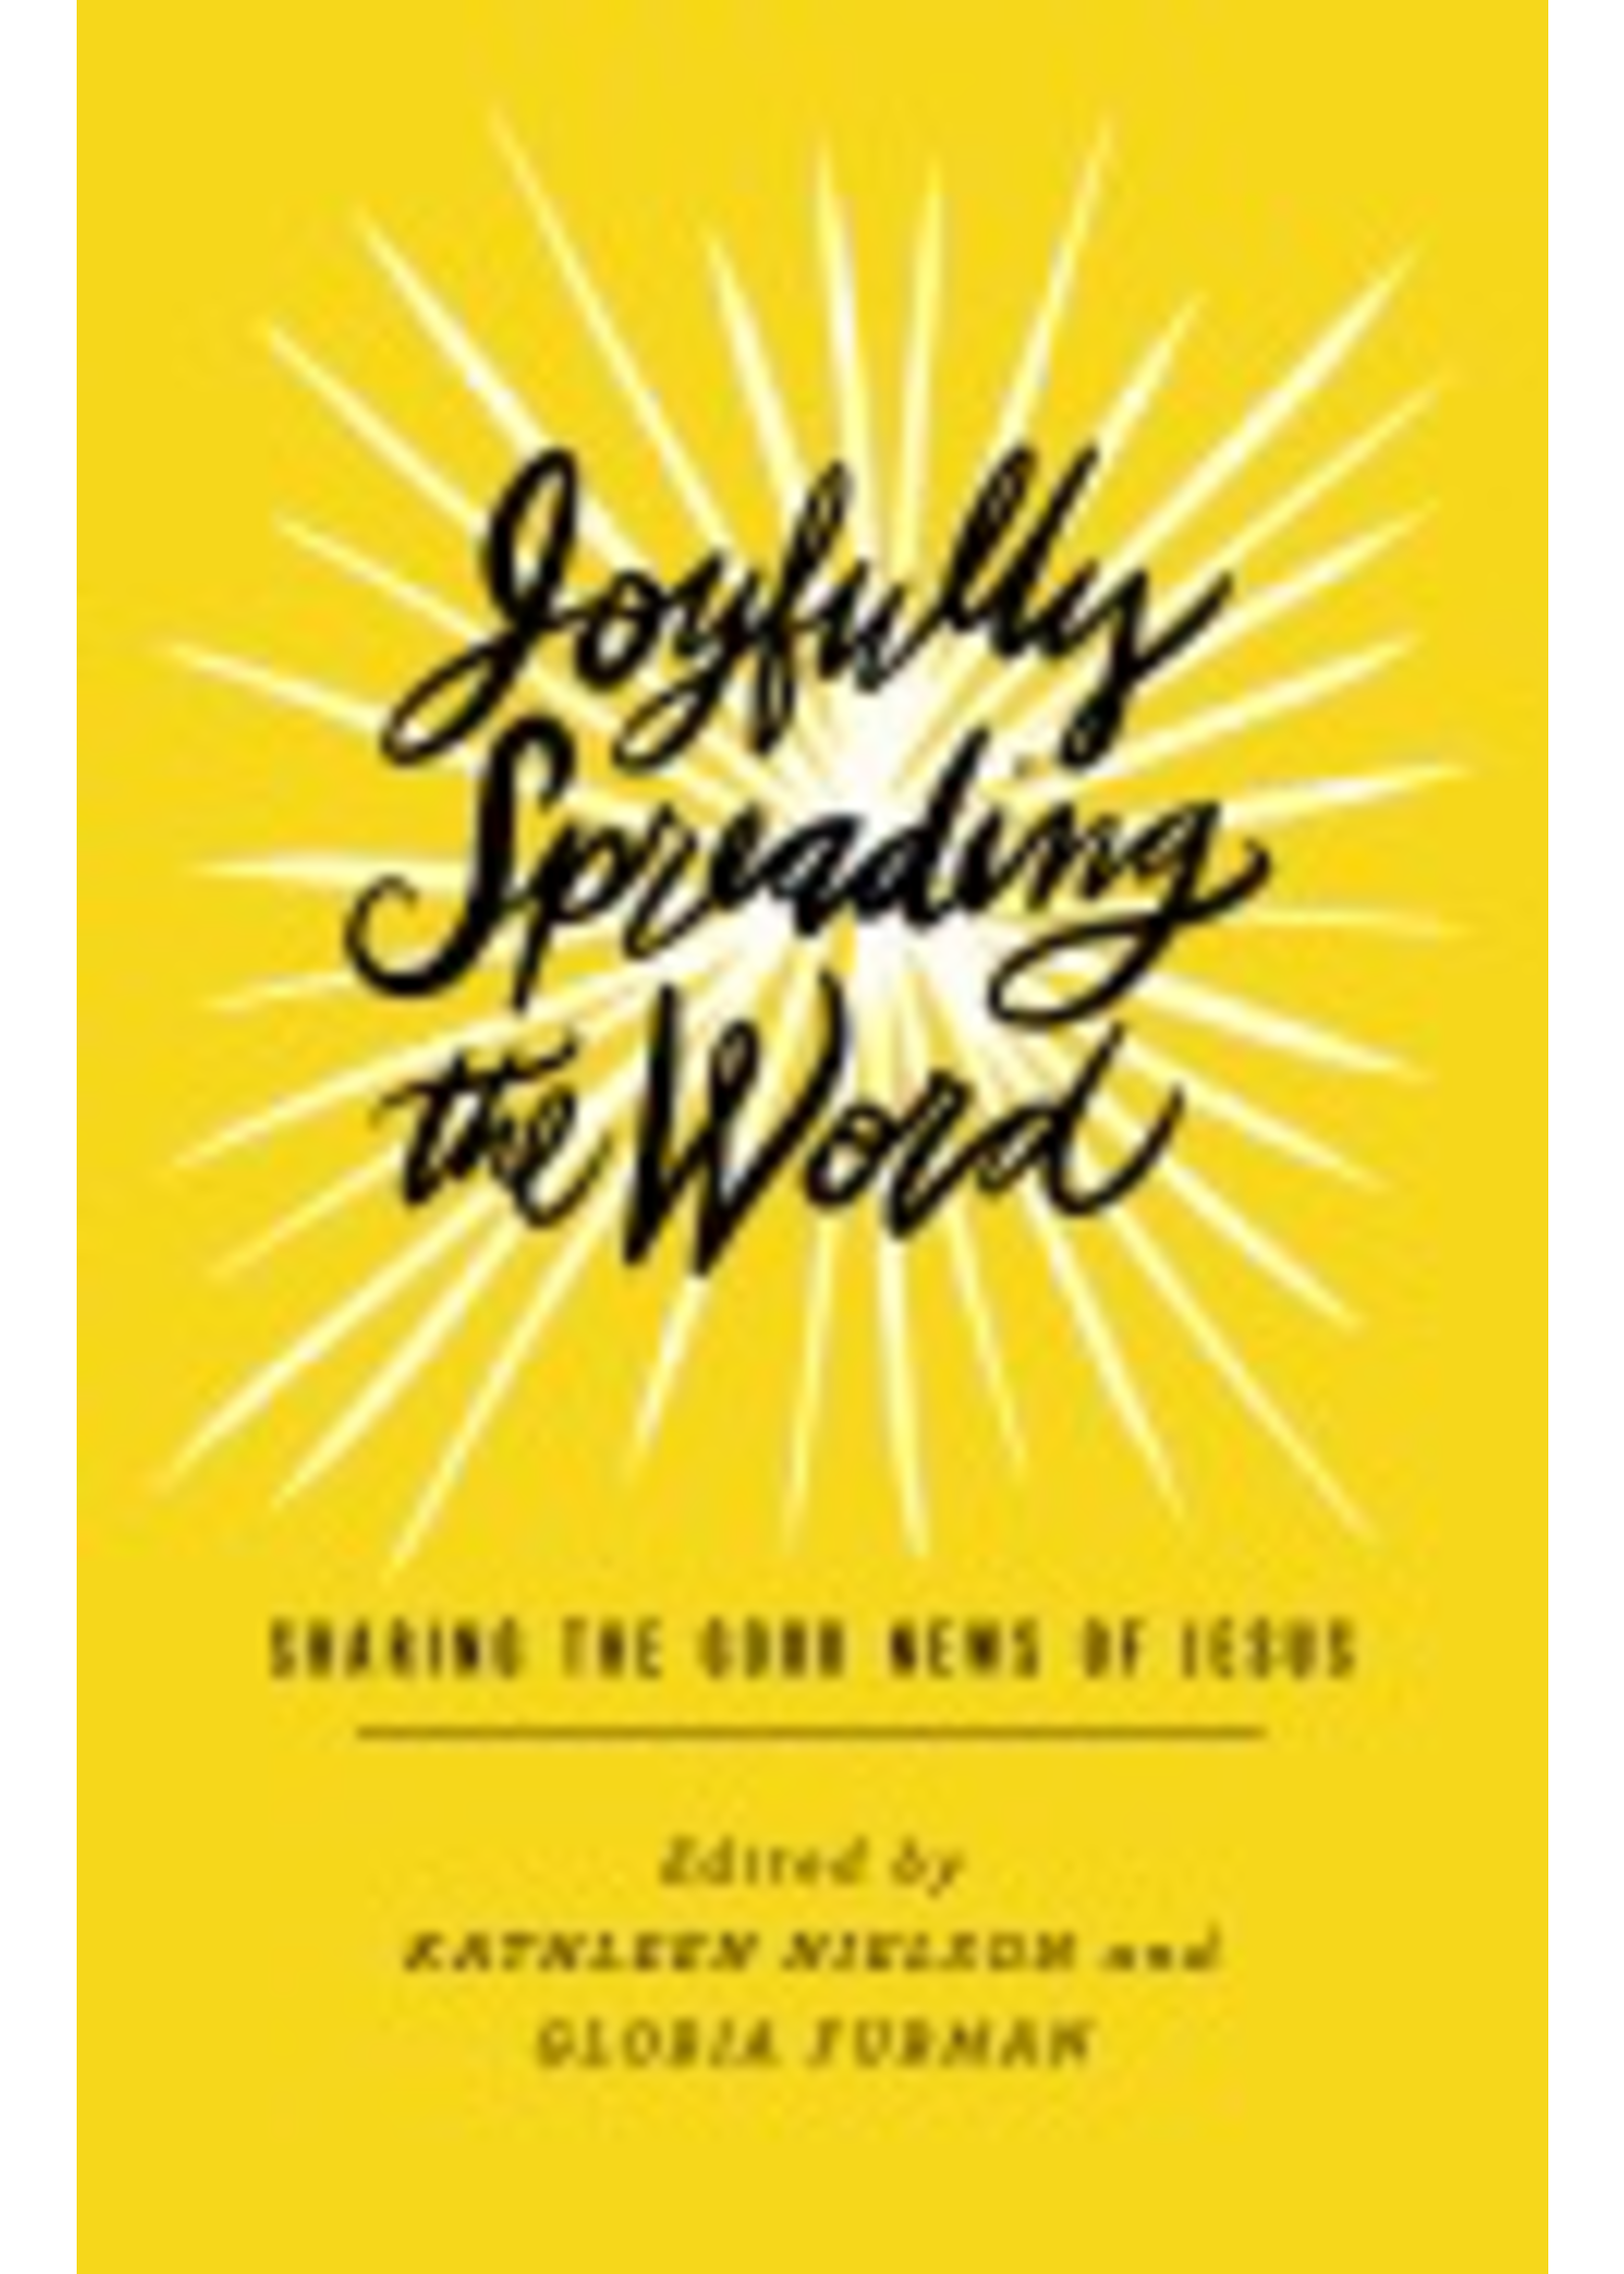 Nielson, Kathleen and Furman, Gloria Joyfully Spreading the Word: Sharing the Good News of Jesus [Kathleen Nielson & Gloria Furman]